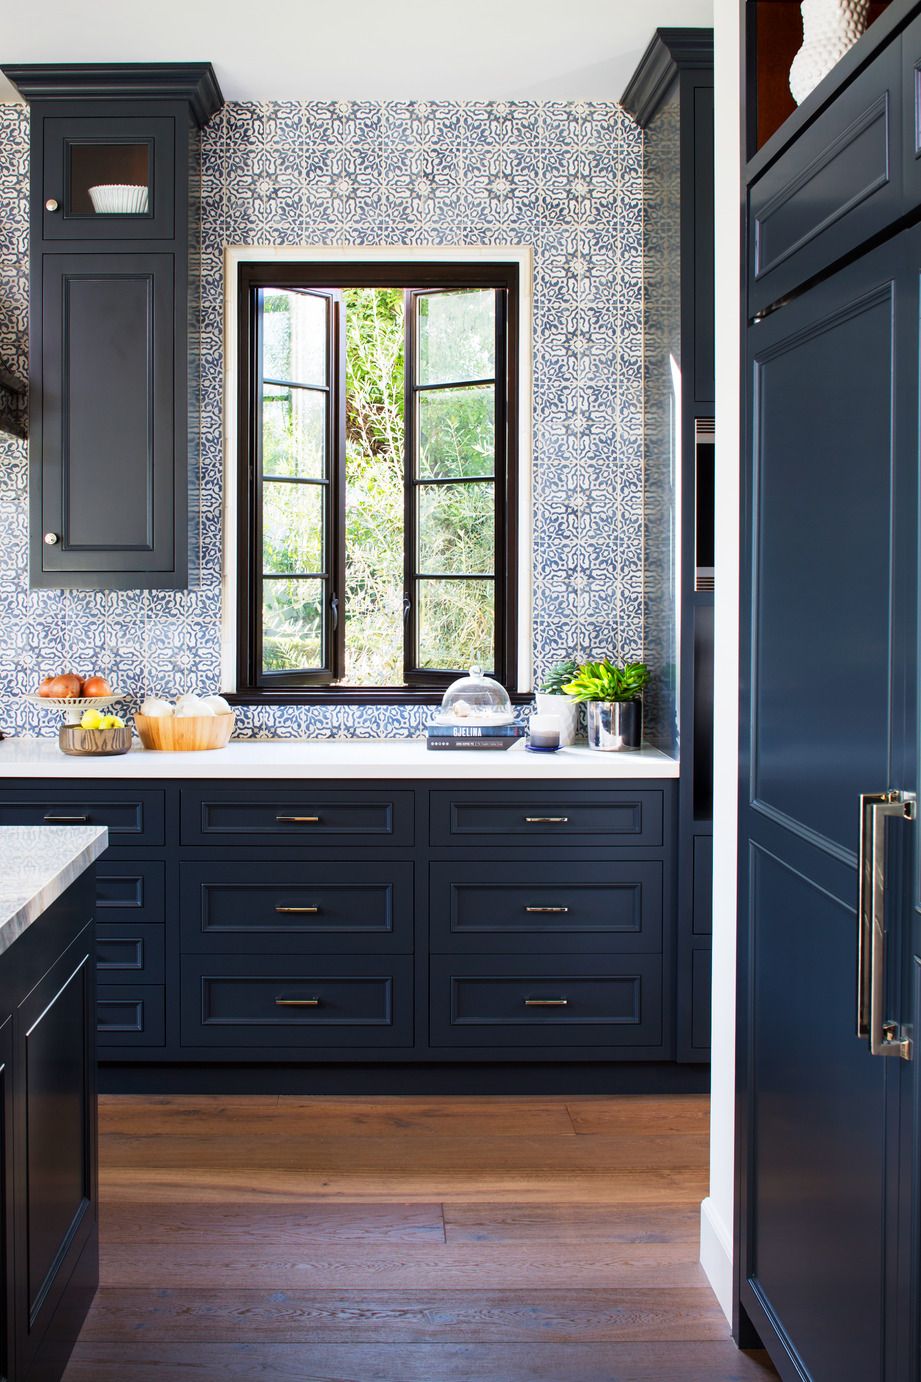 kitchen backsplash, blue and white tile backsplash, ceramic tiles, navy blue cabinets, white countertop